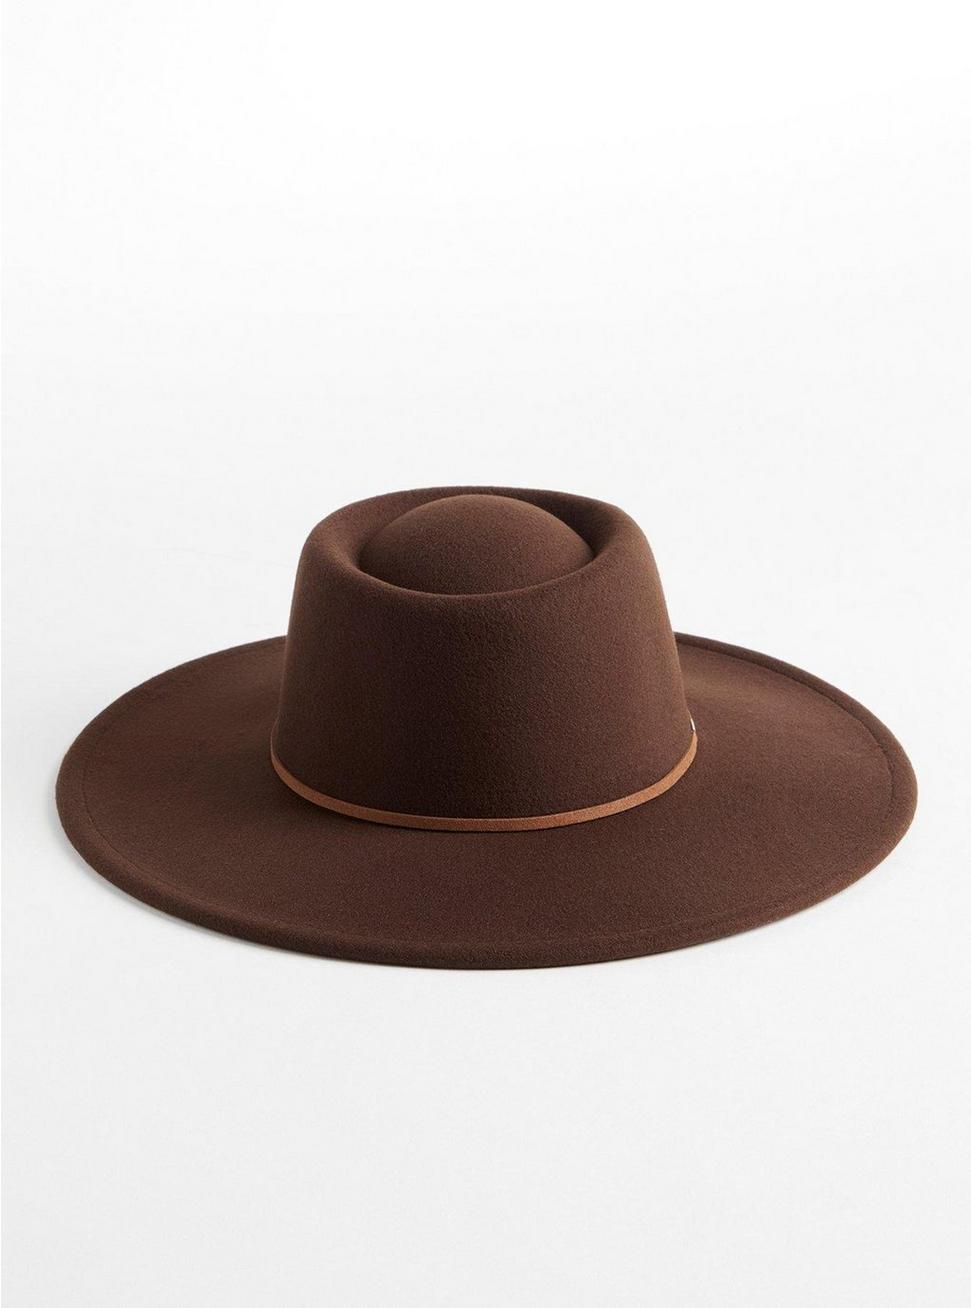 Plus Size Boater Hat, BROWN, hi-res